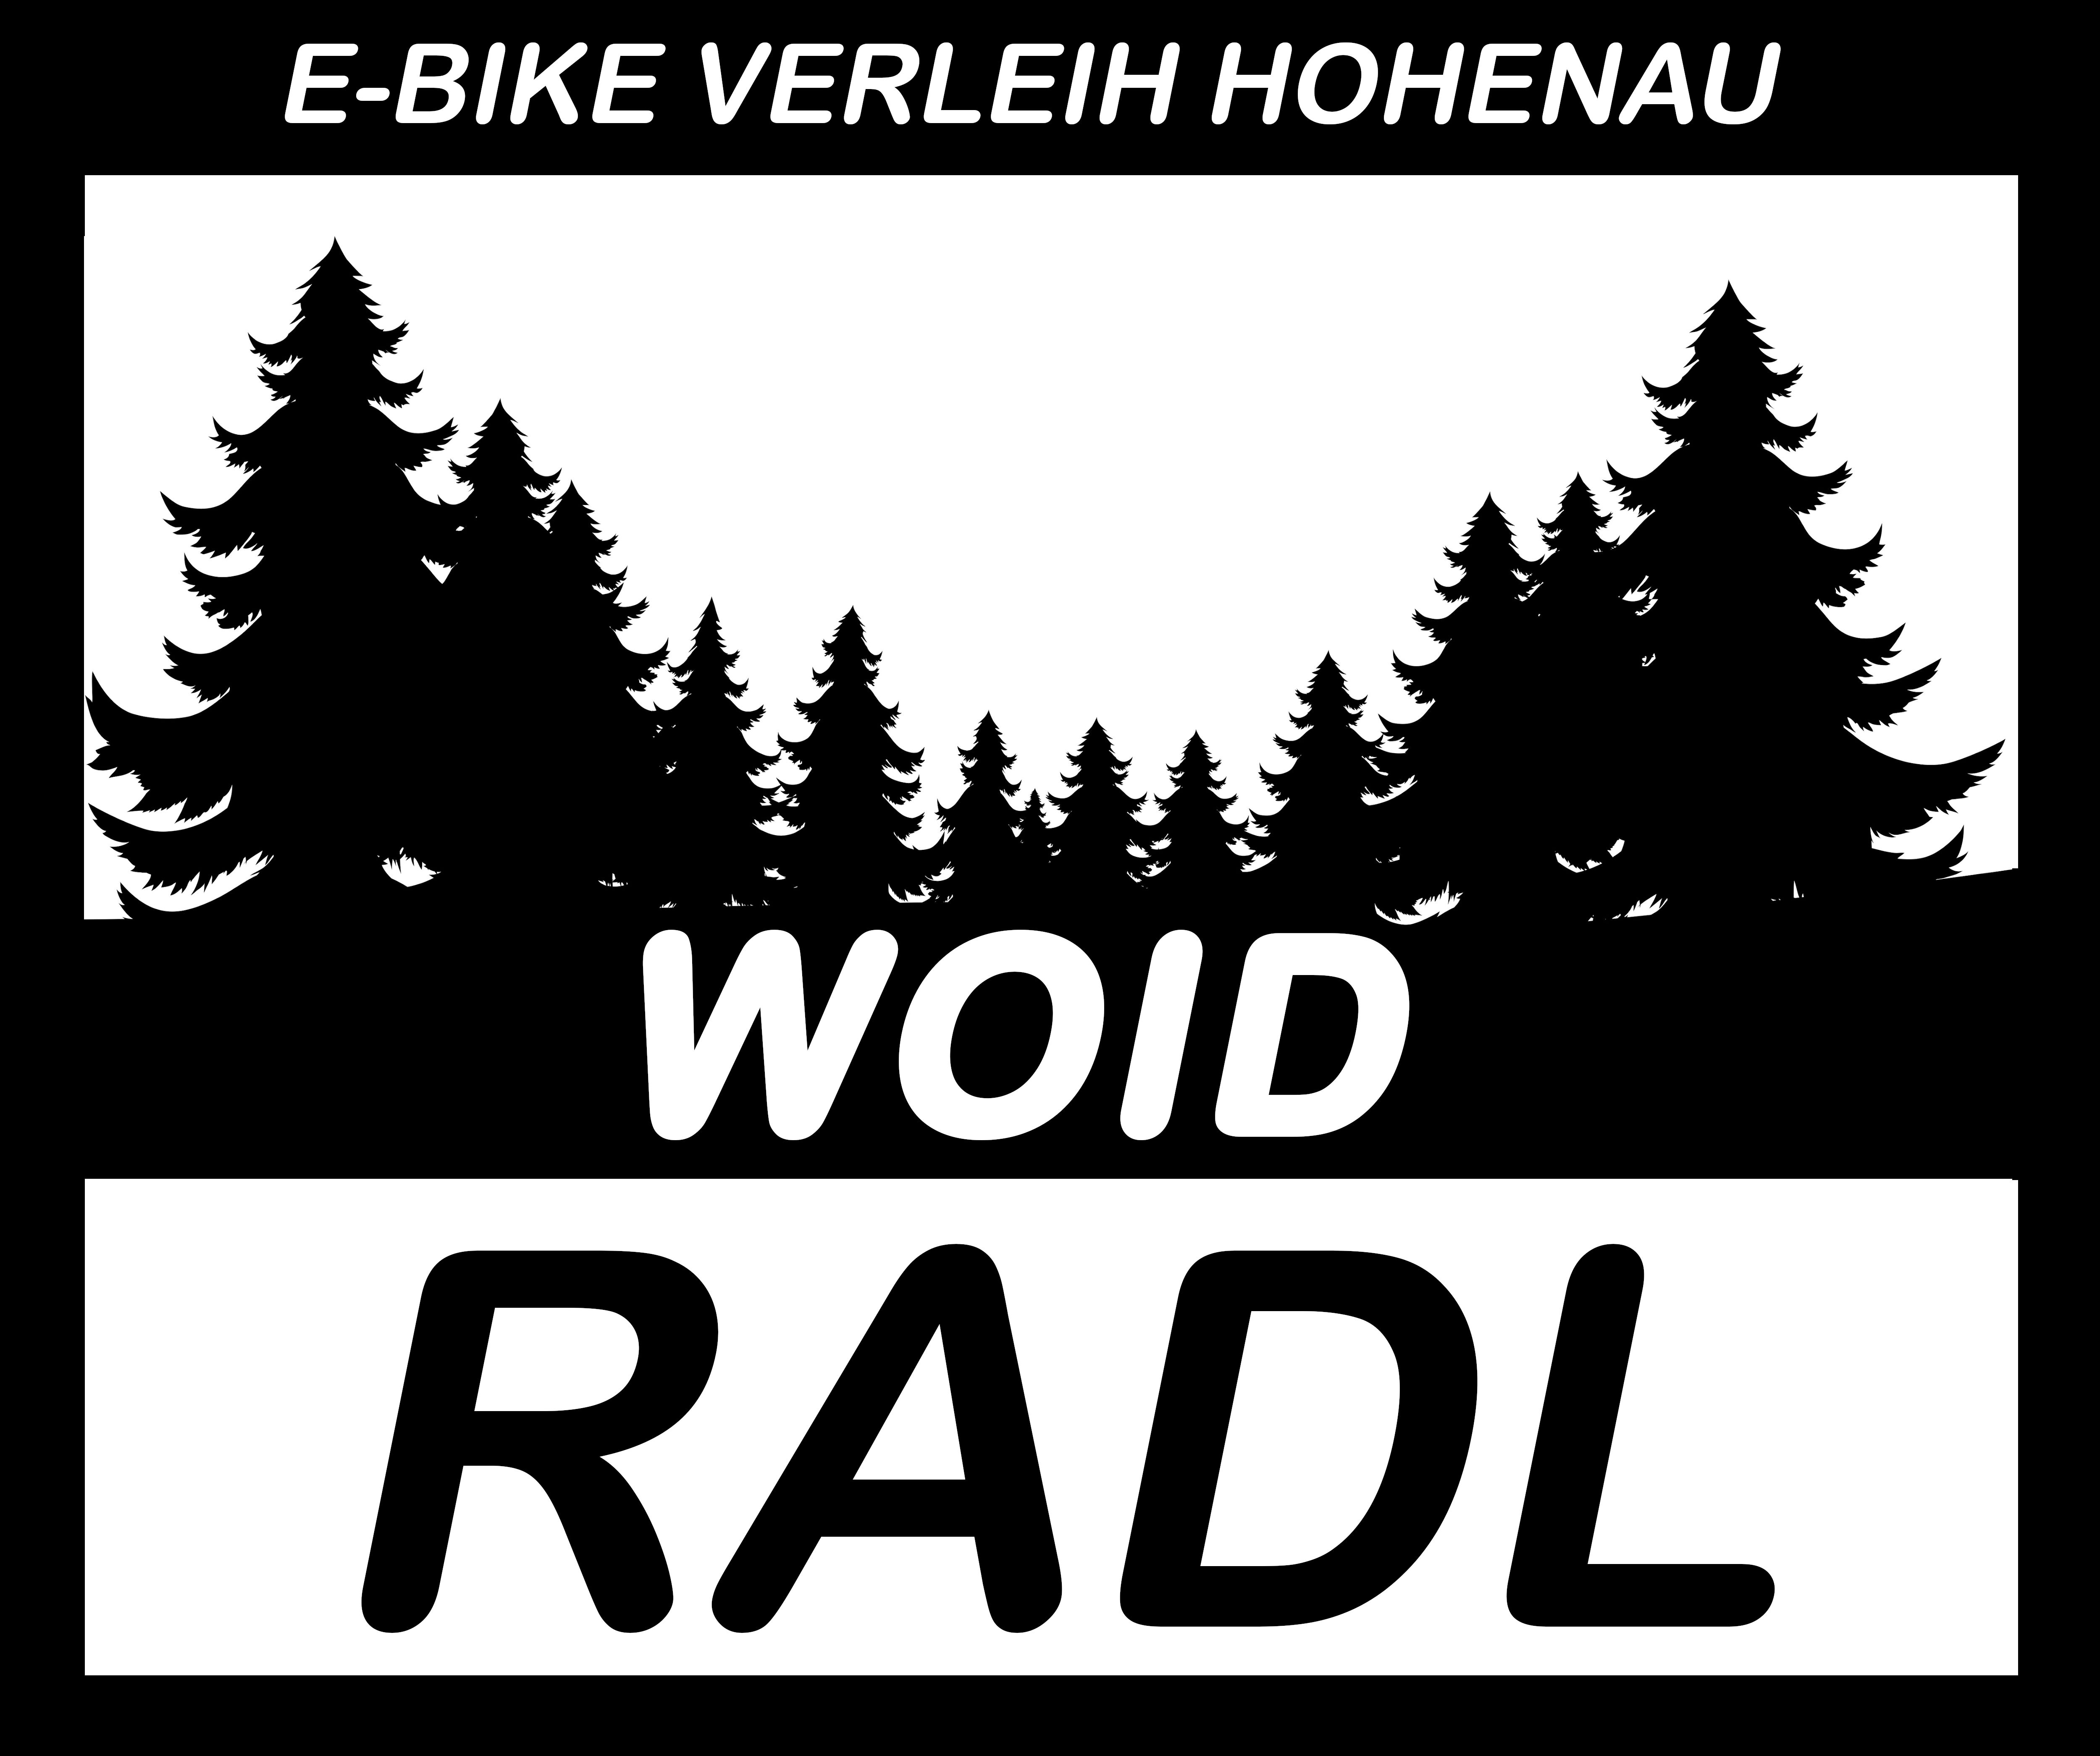 WOID-RADL